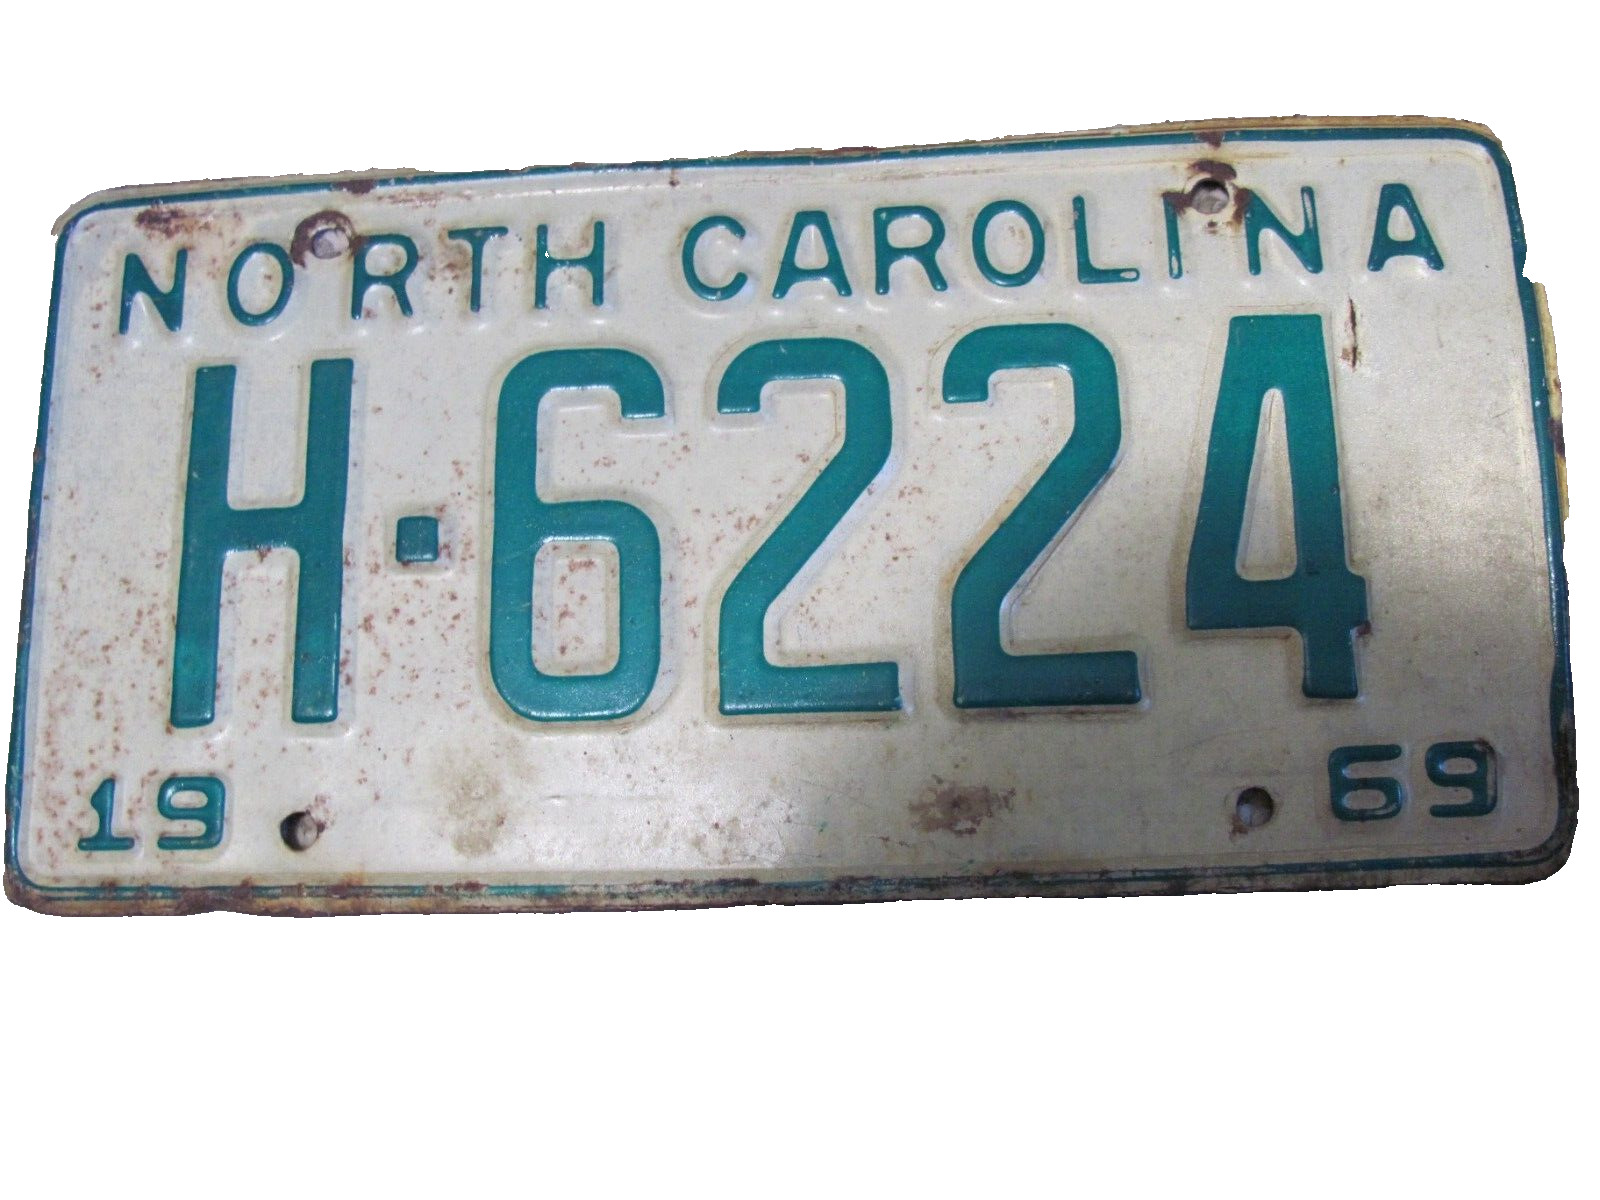 1969 North Carolina license plate